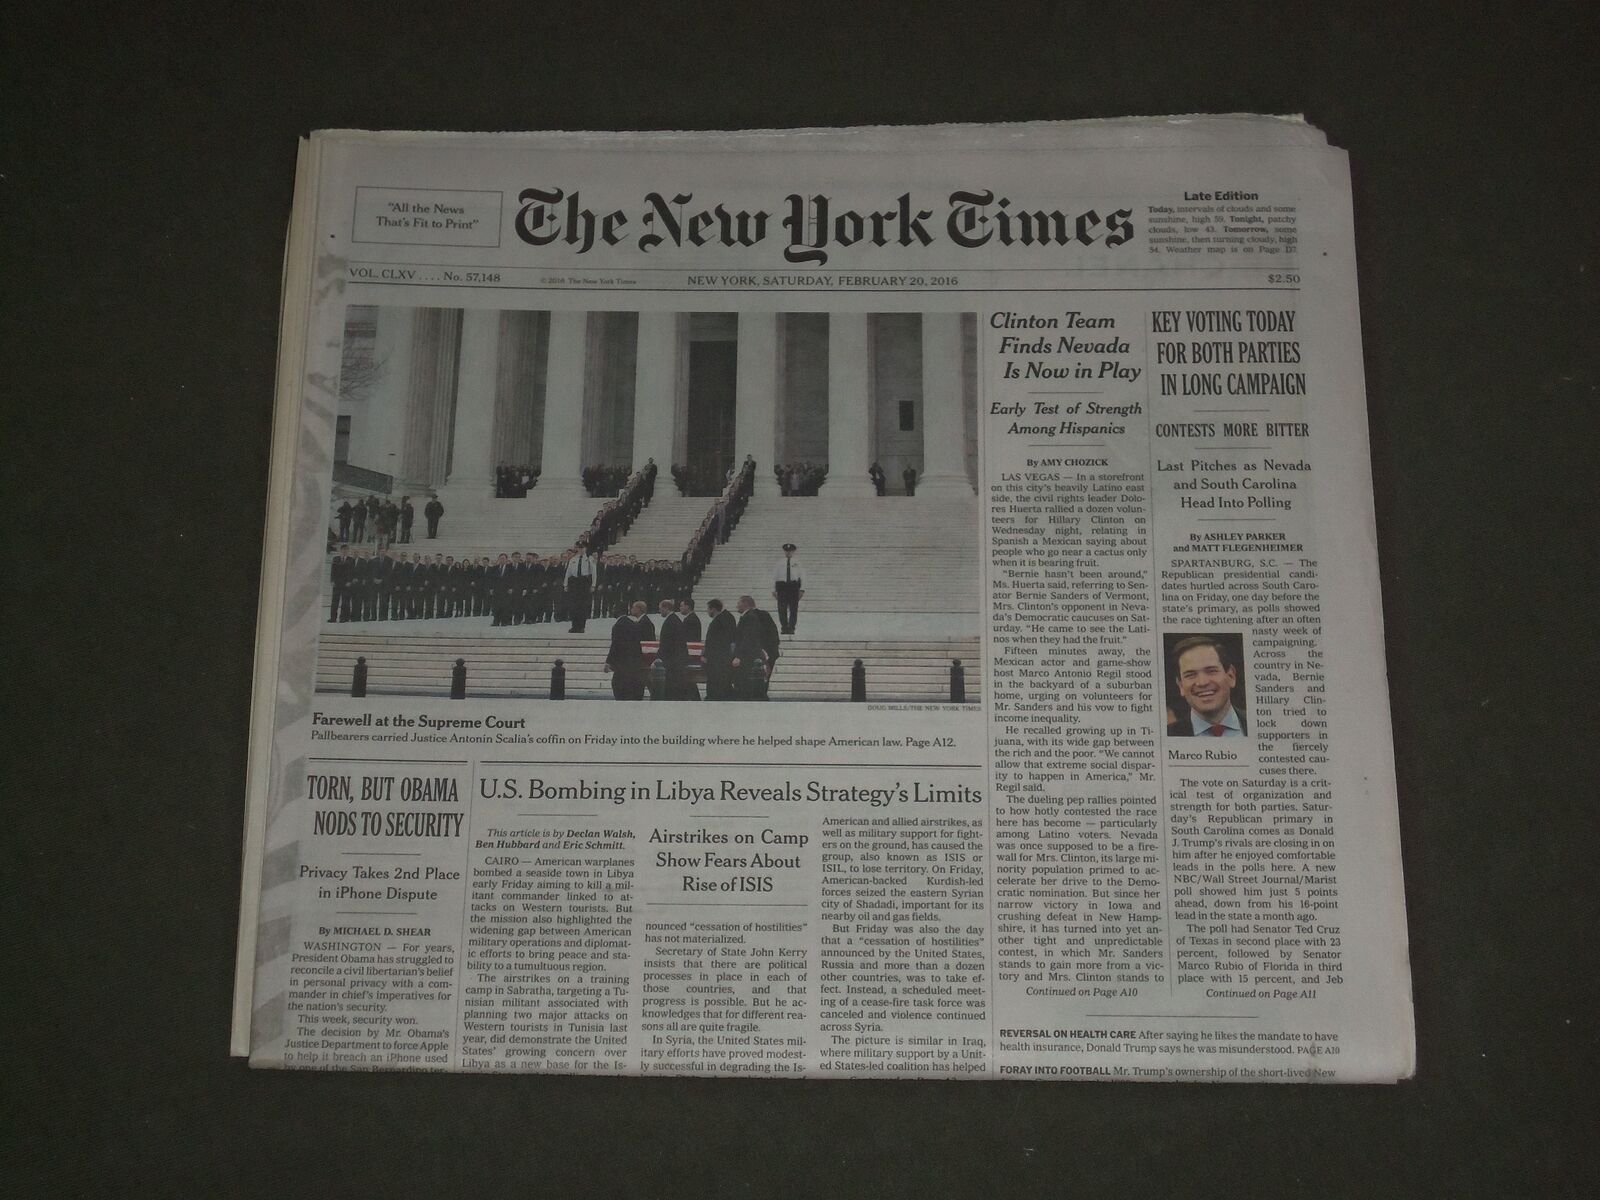 2016 FEBRUARY 20 NEW YORK TIMES - JUSTICE ANTONIN SCALIA FURNERAL